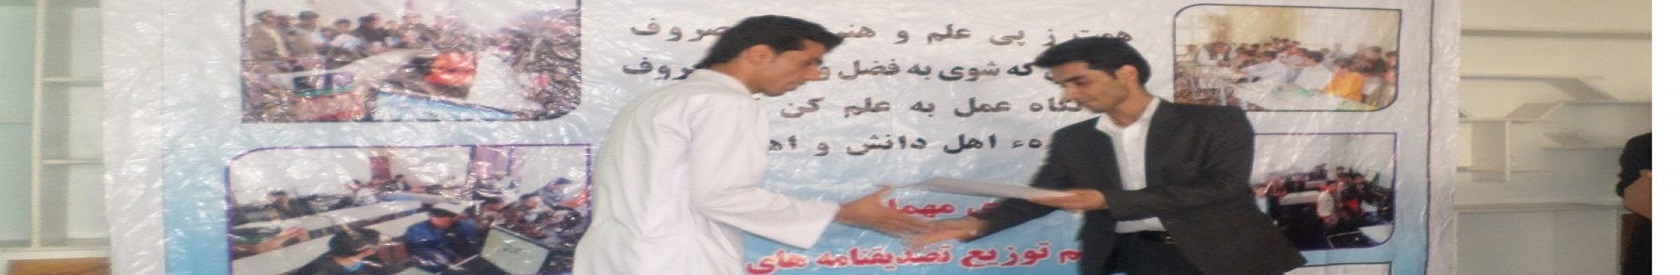 Graduation ceremony for 256 students of RWDOA Training Center in Herat